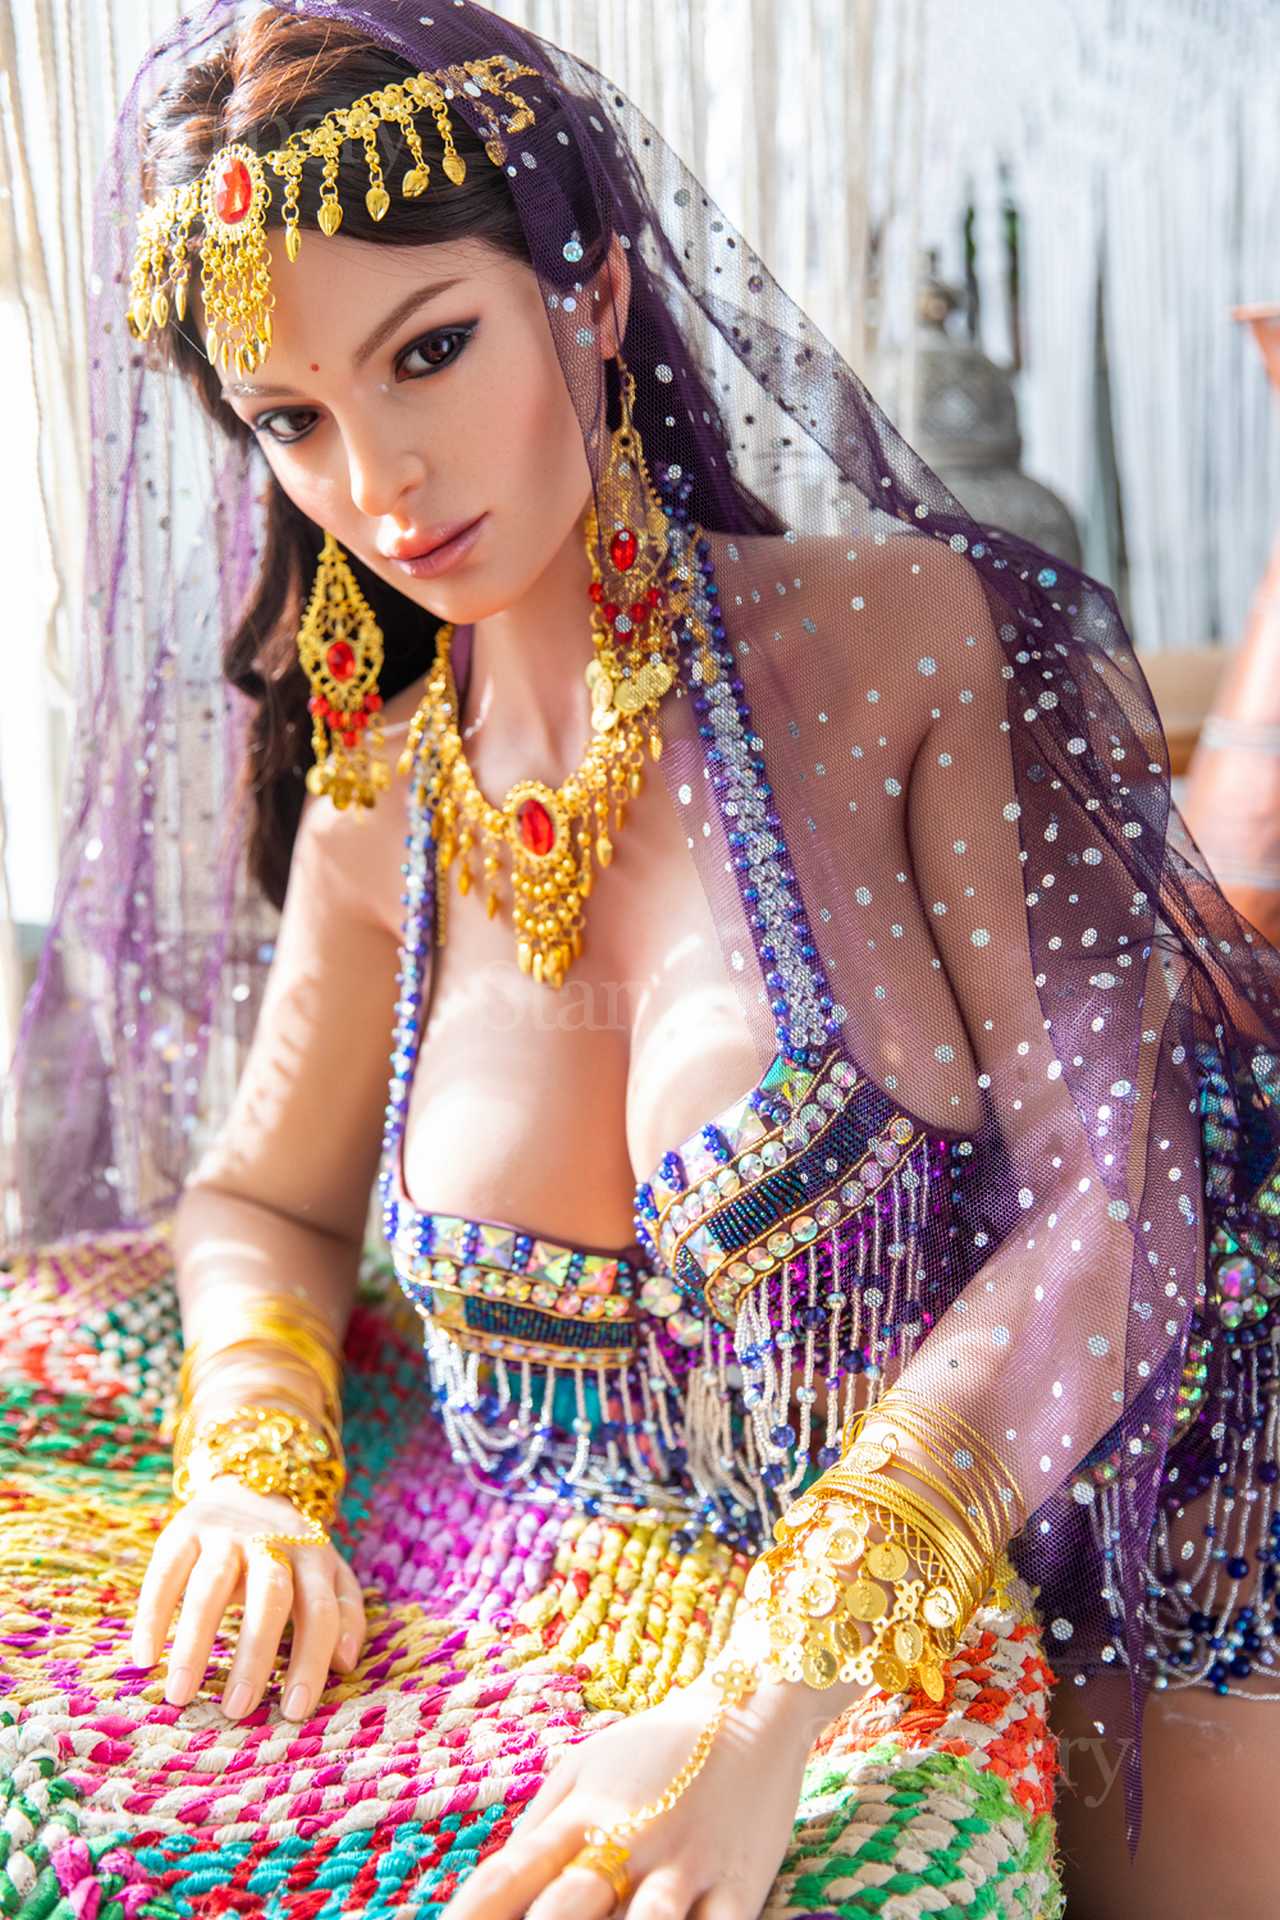 Arabian Temptation: Mavis - 165cm Starpery Sex Doll with G Cup Breasts & Big Round Butt